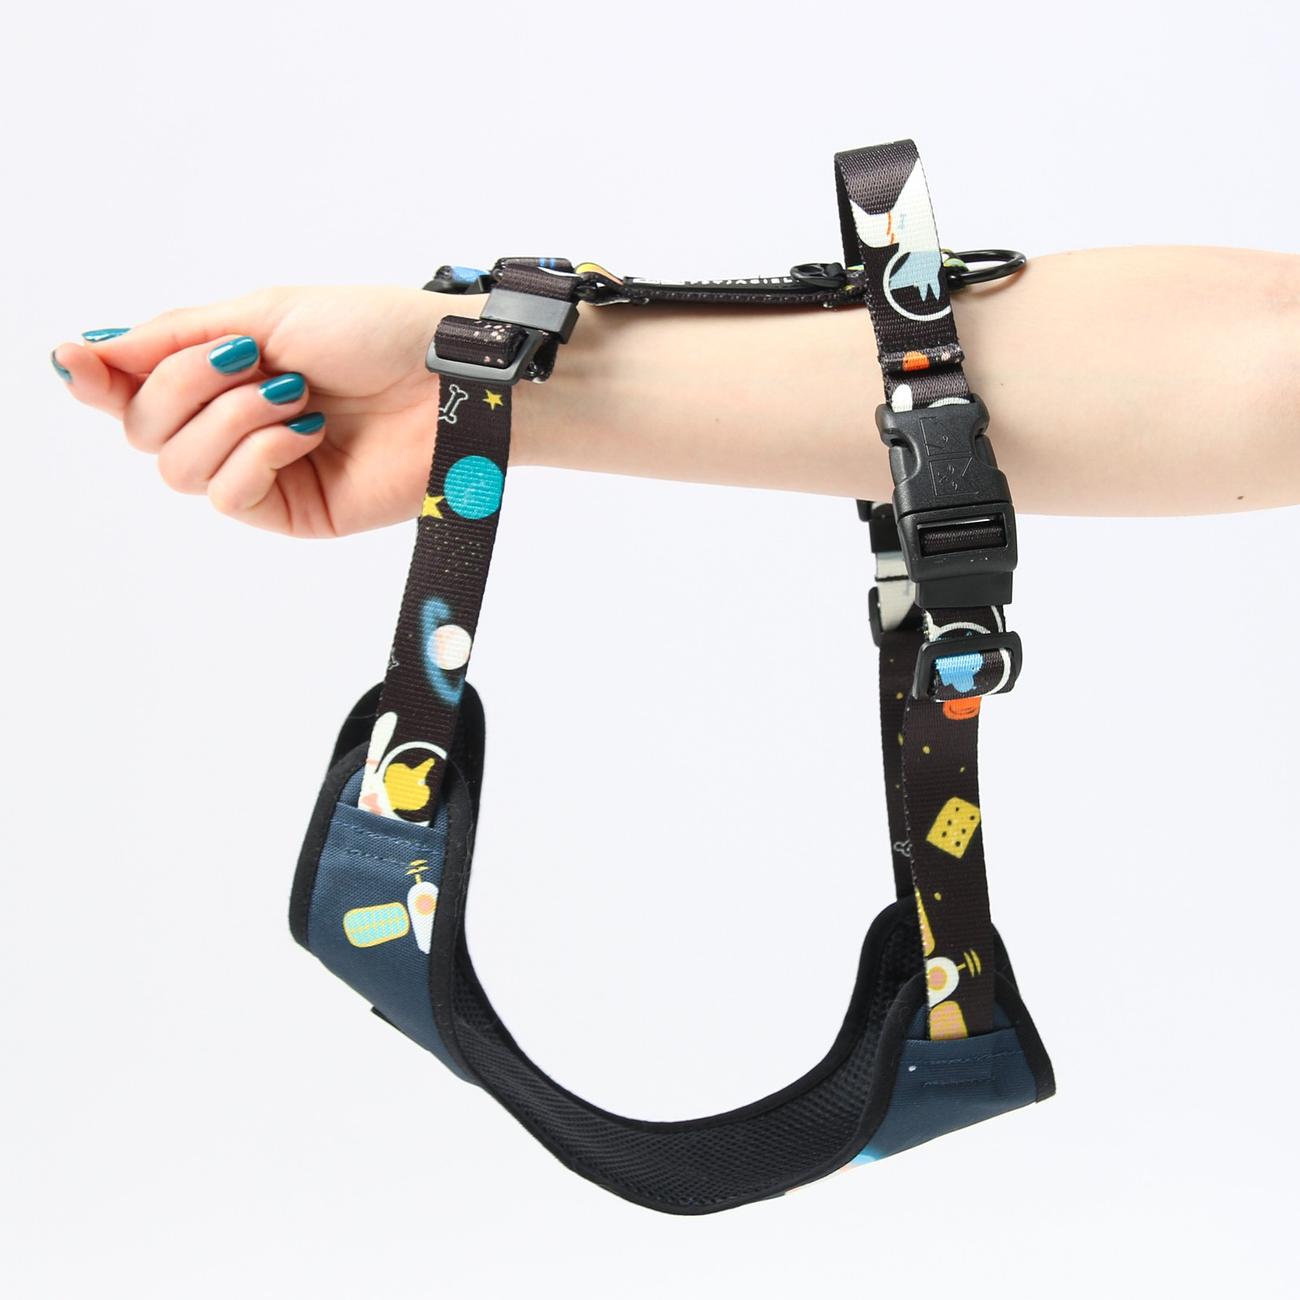 "I need space" pressure-free harness